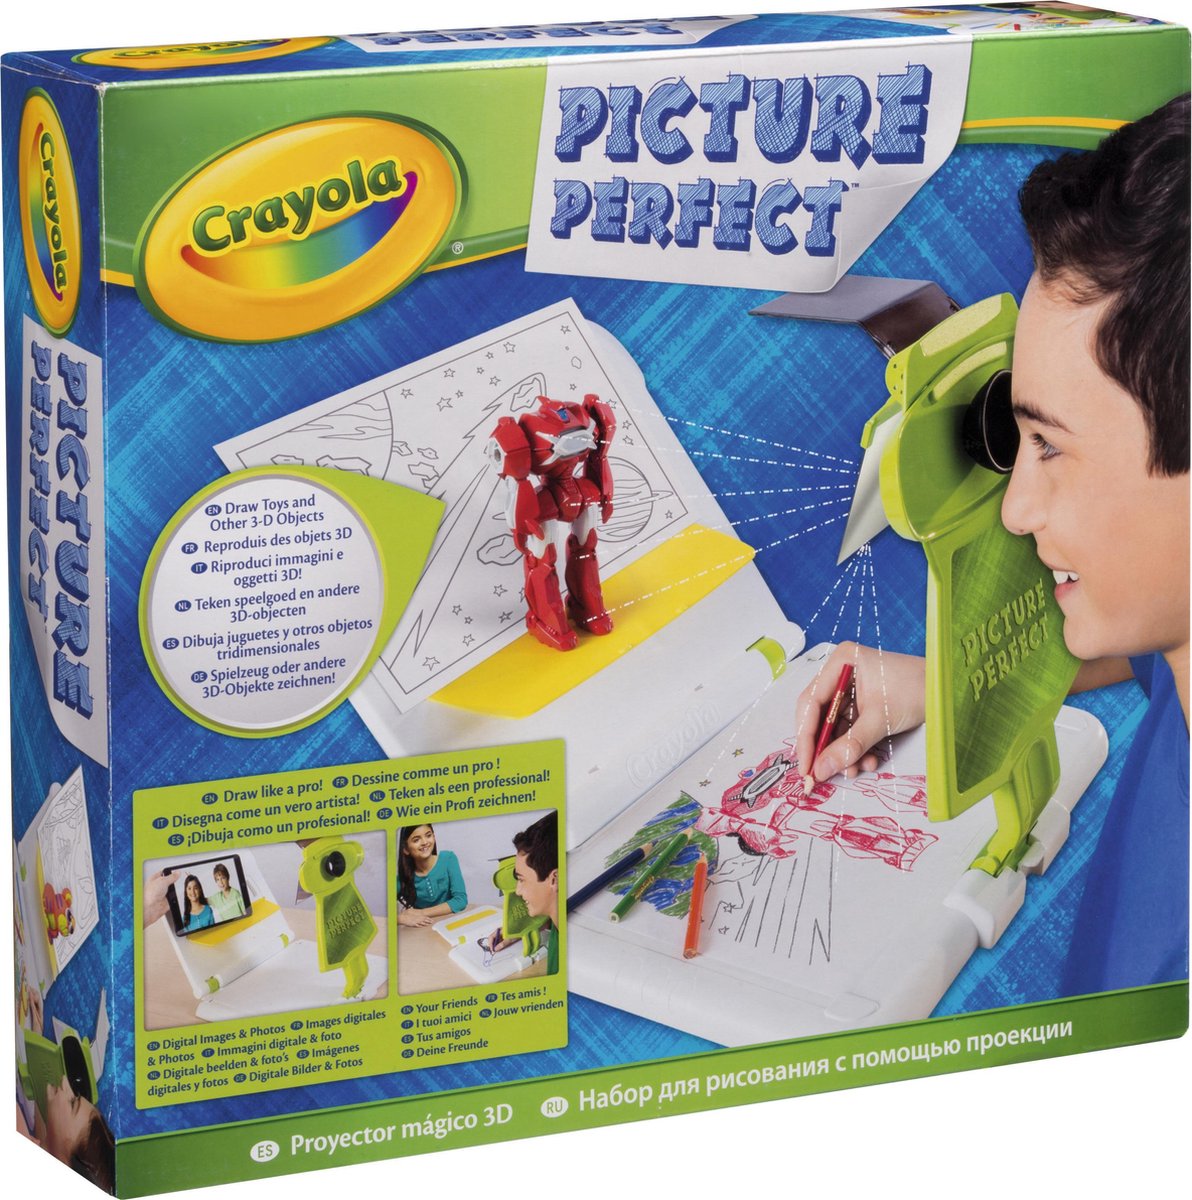 Crayola Picture Perfect - Tekenprojector | bol.com